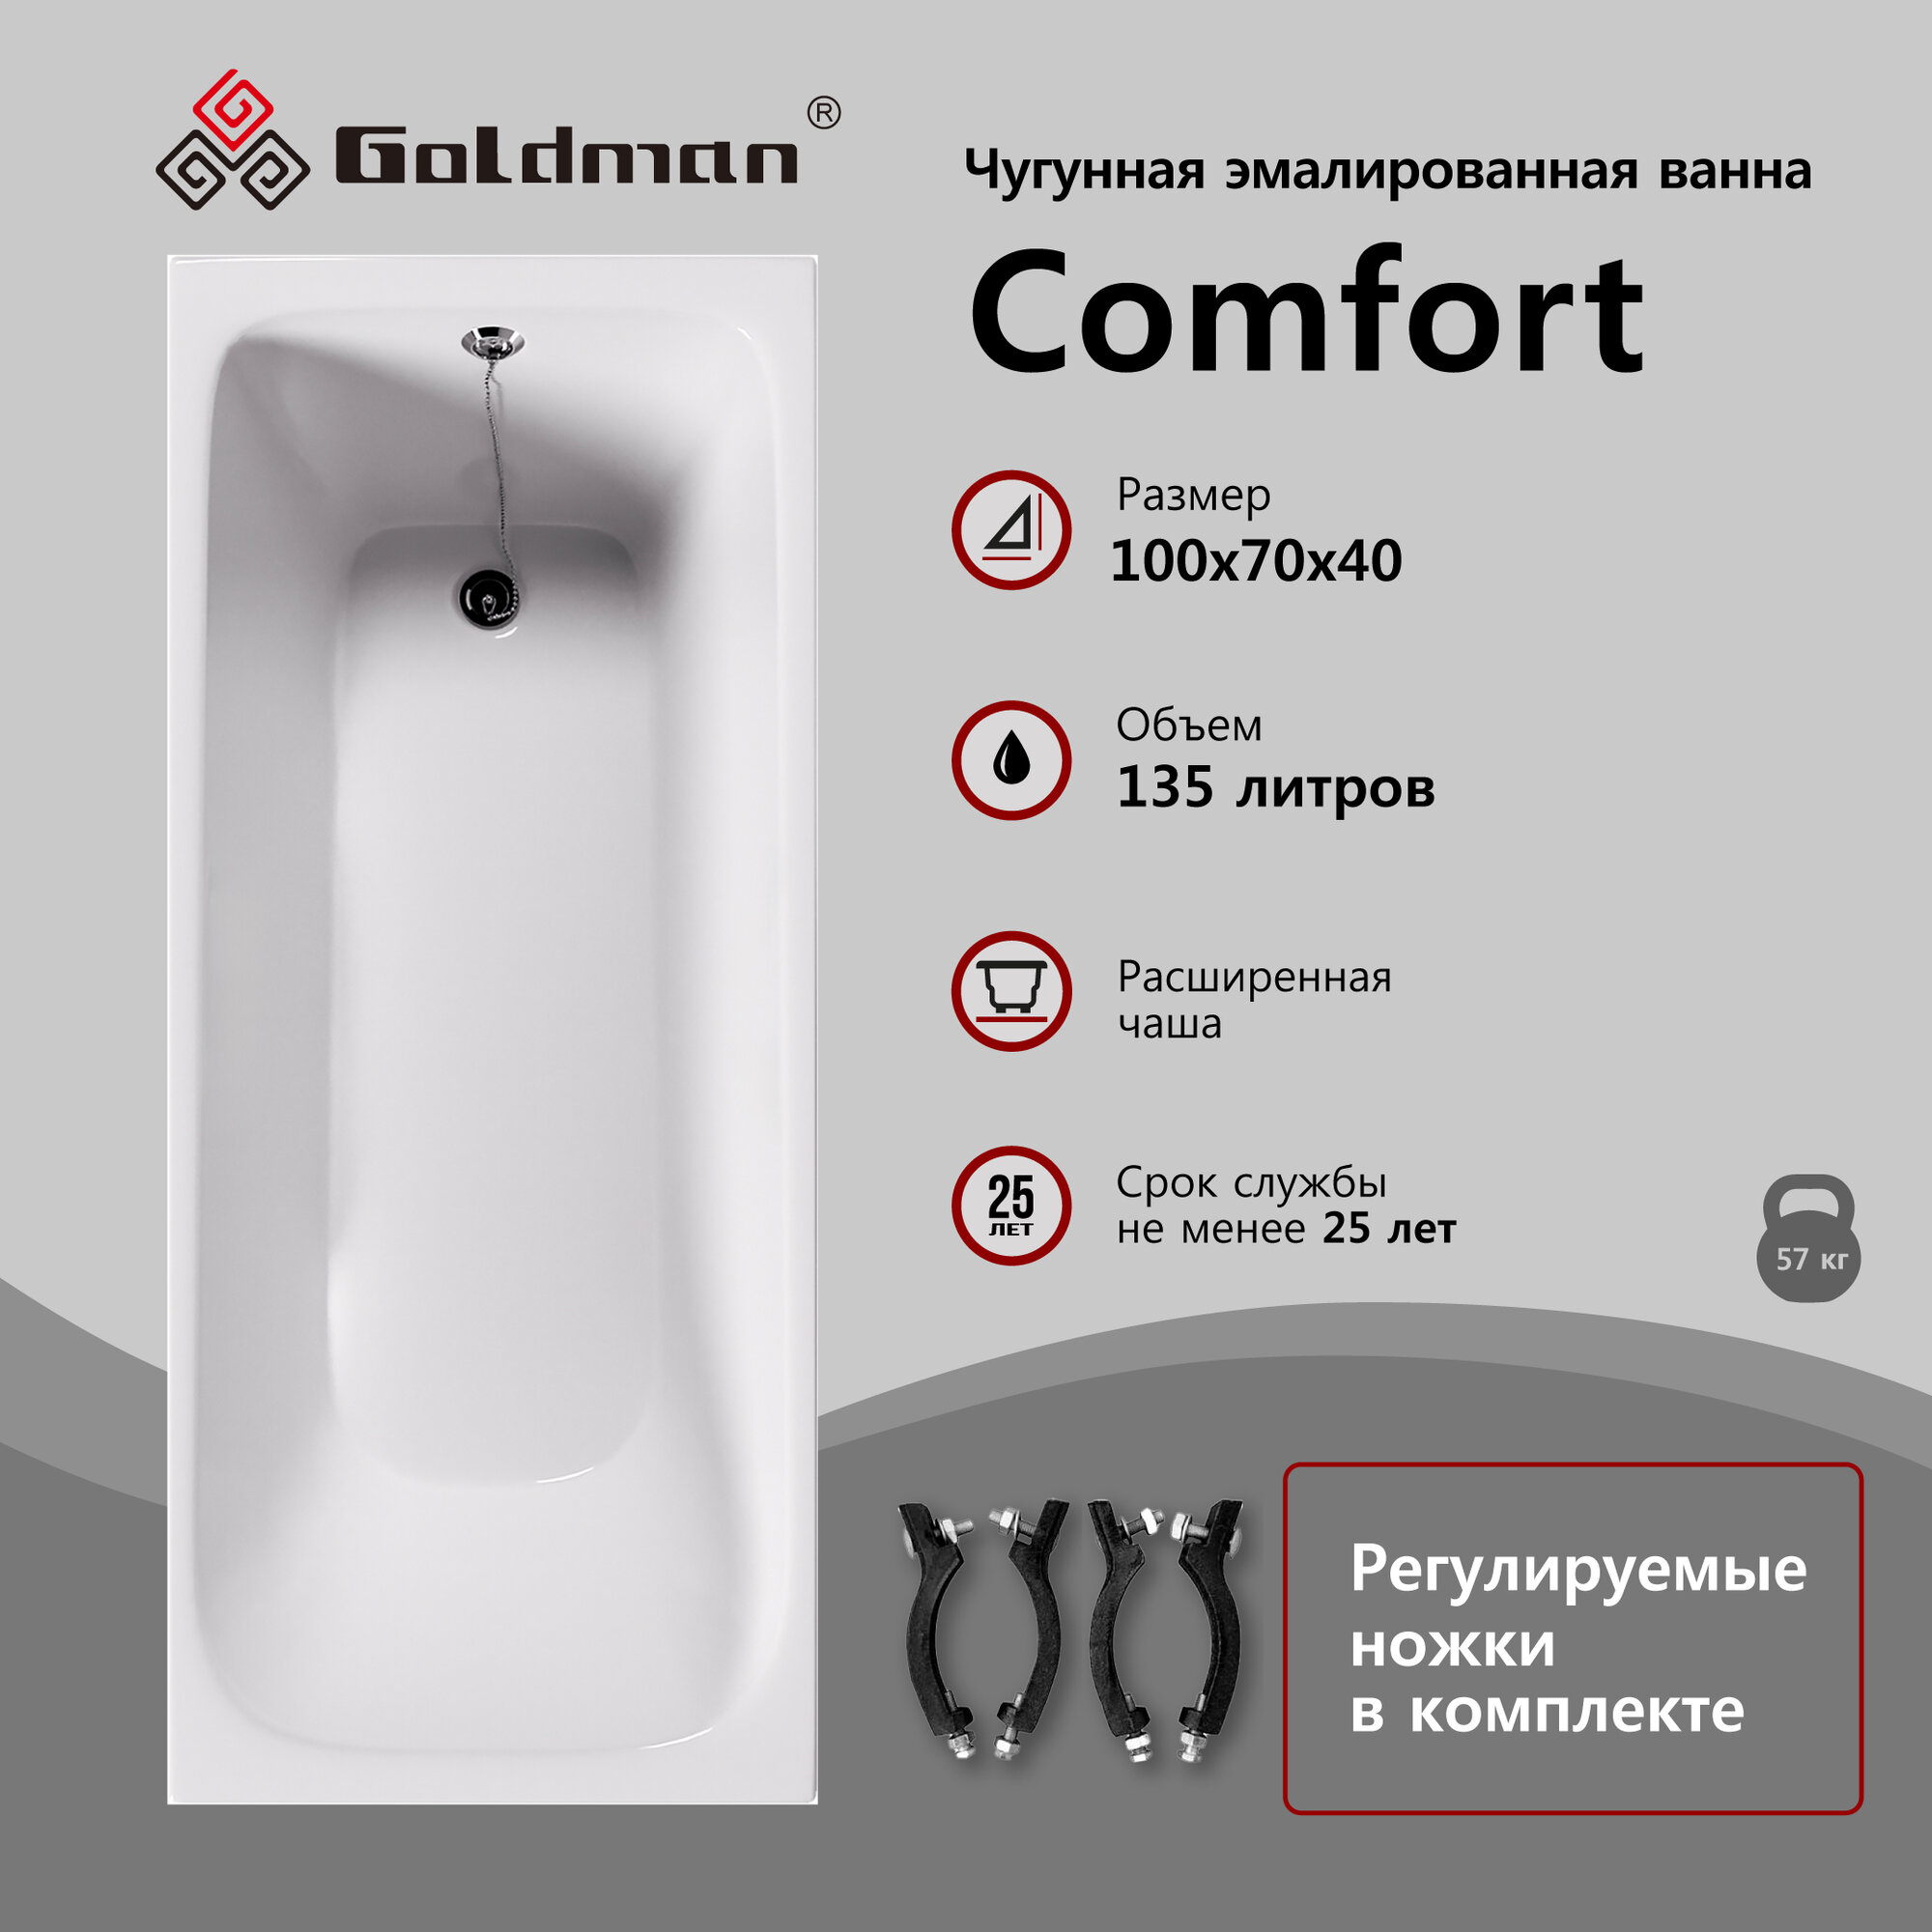 Чугунная ванна Goldman Comfort 100x70x40